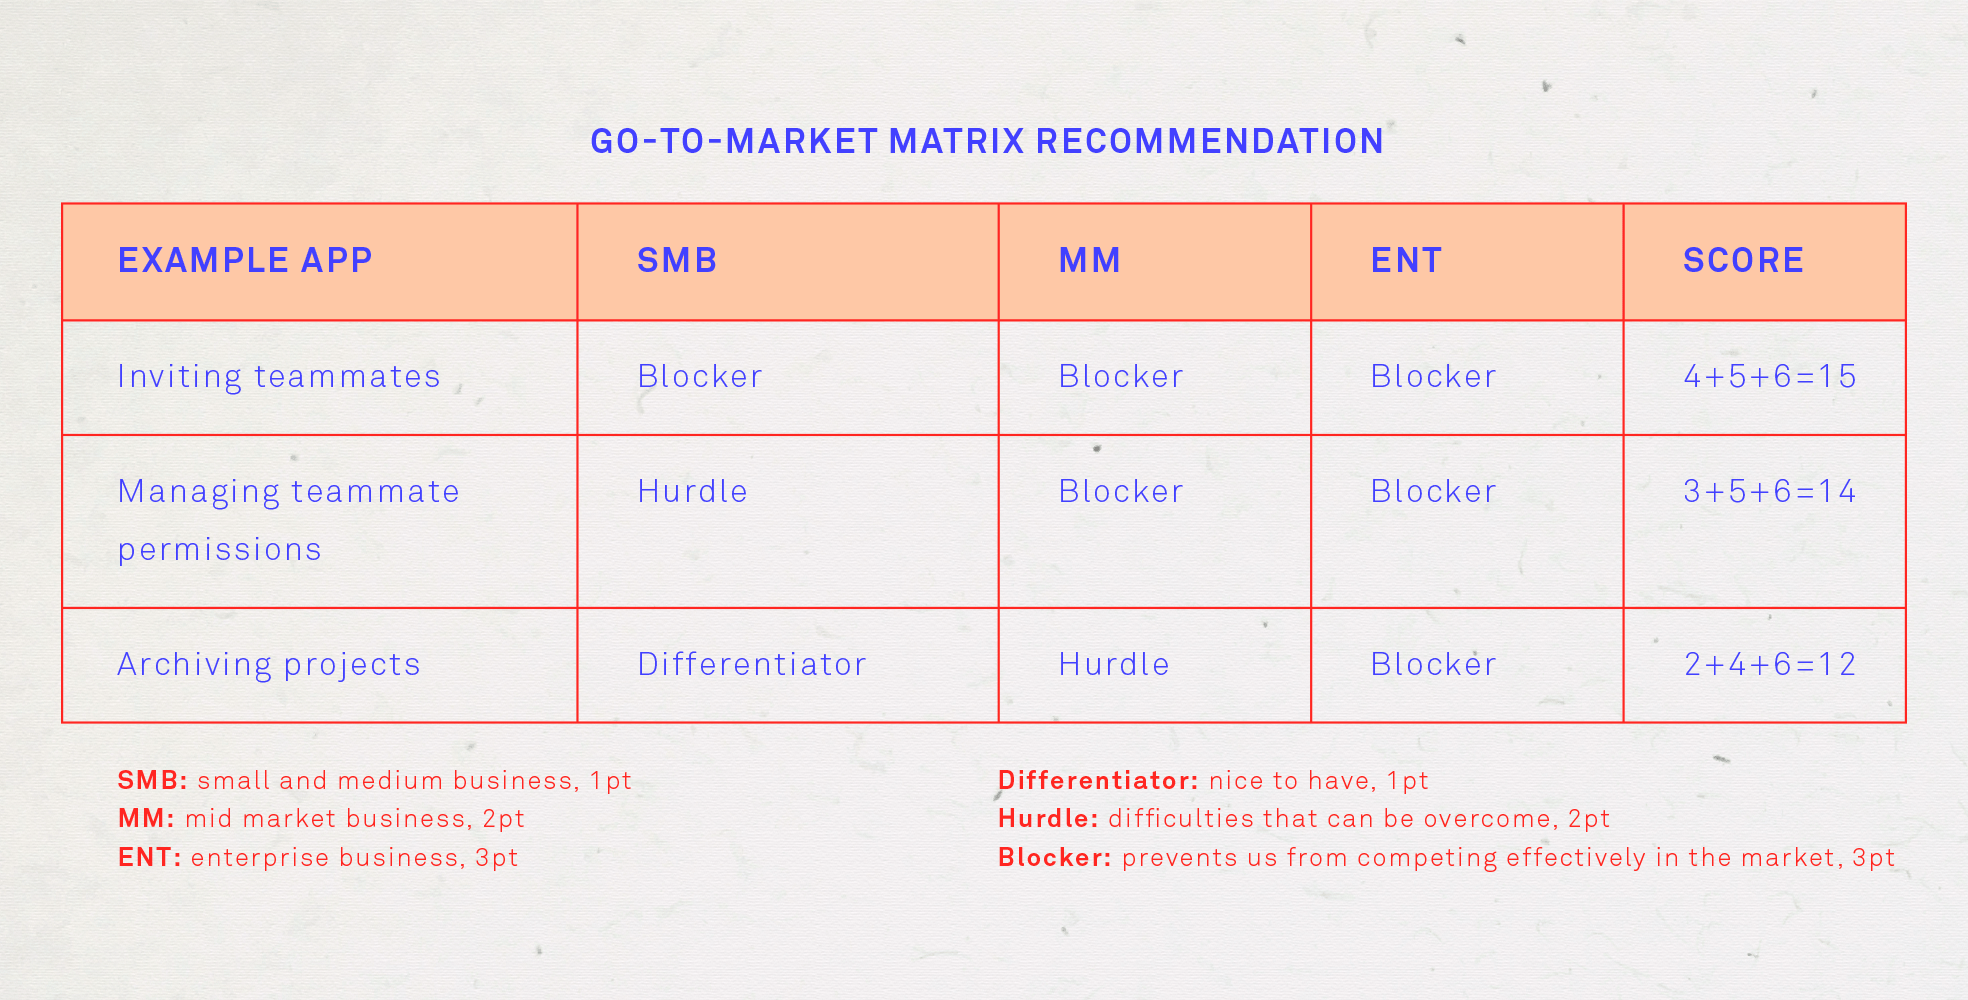 Go-to-market matrix